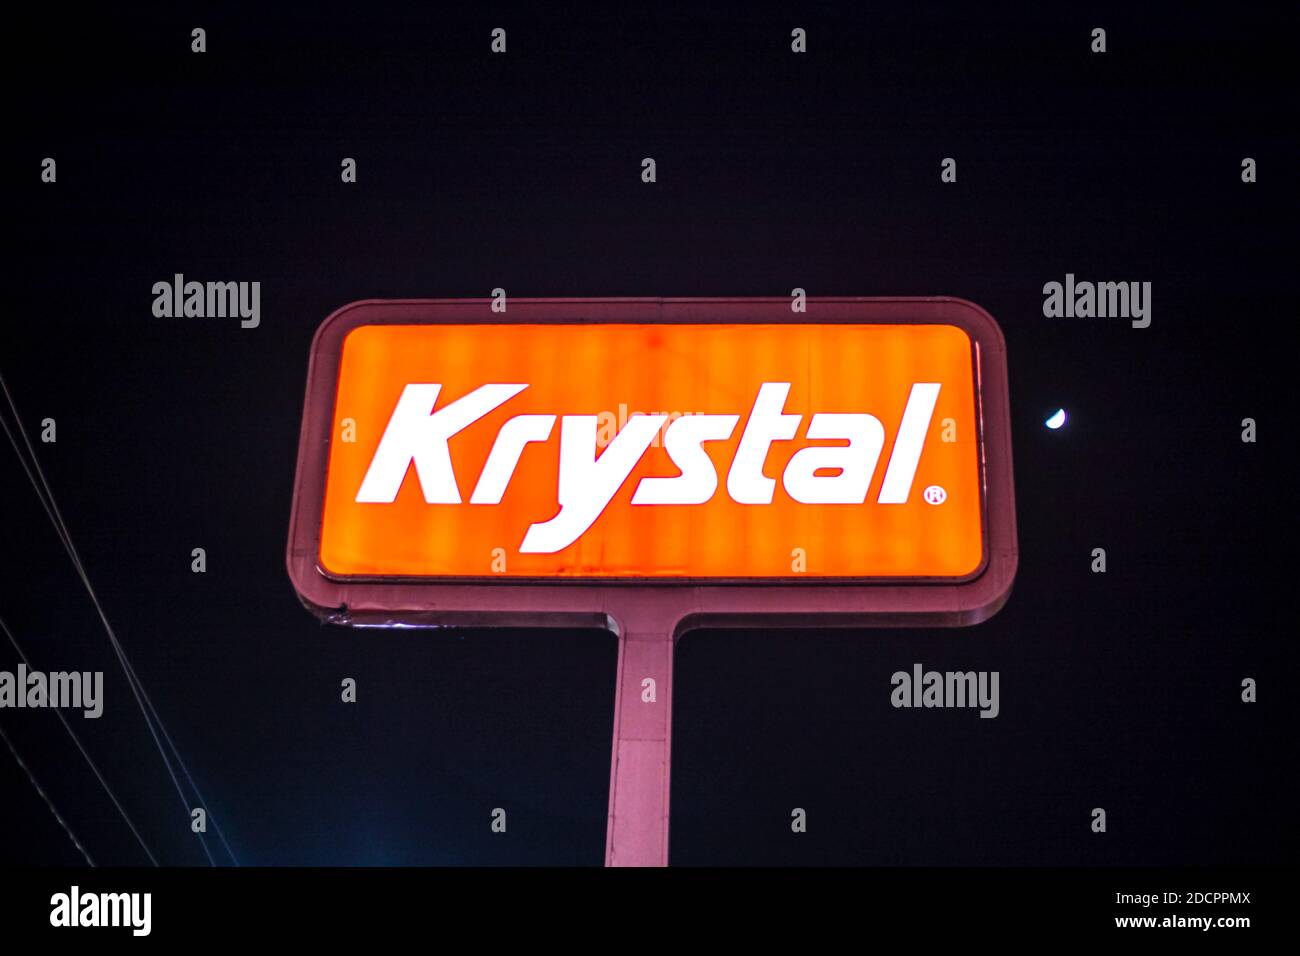 Augusta, Ga / USA - 11 20 20: Krystal Restaurant fast food road sign at night Stock Photo